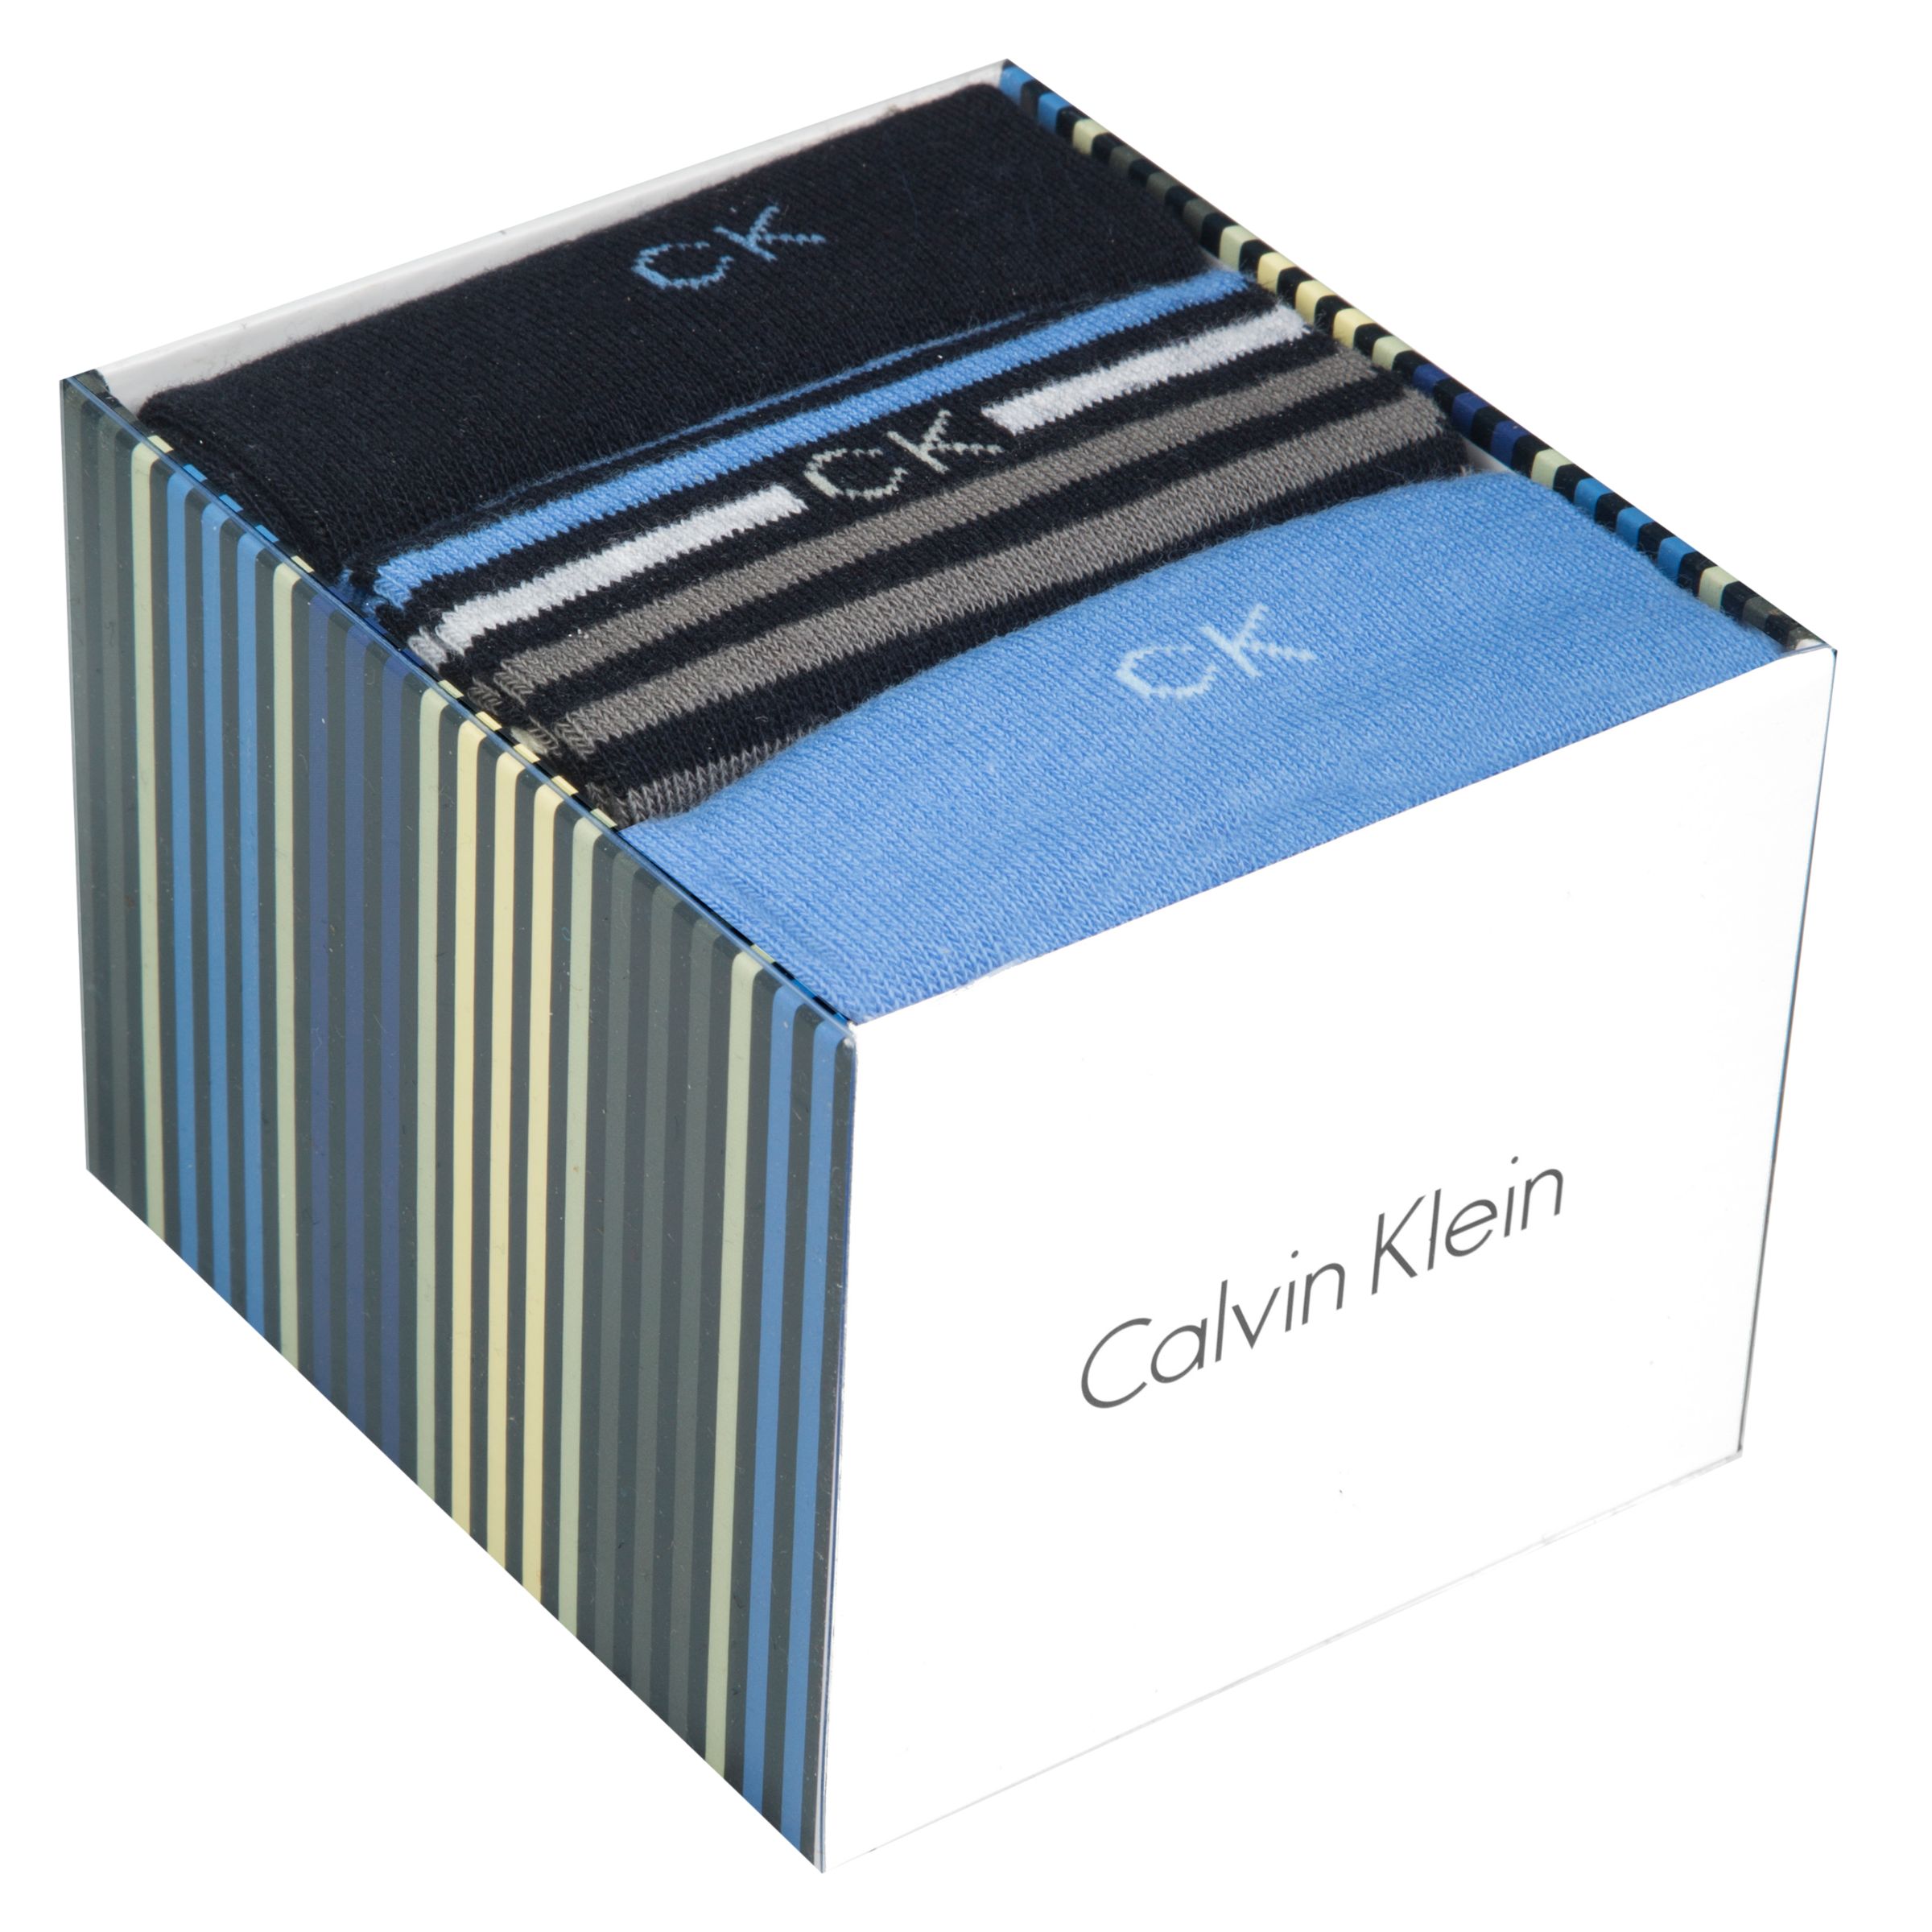 Calvin Klein Socks Gift Box, One Size, Pack of 3, Black/Ultramarine